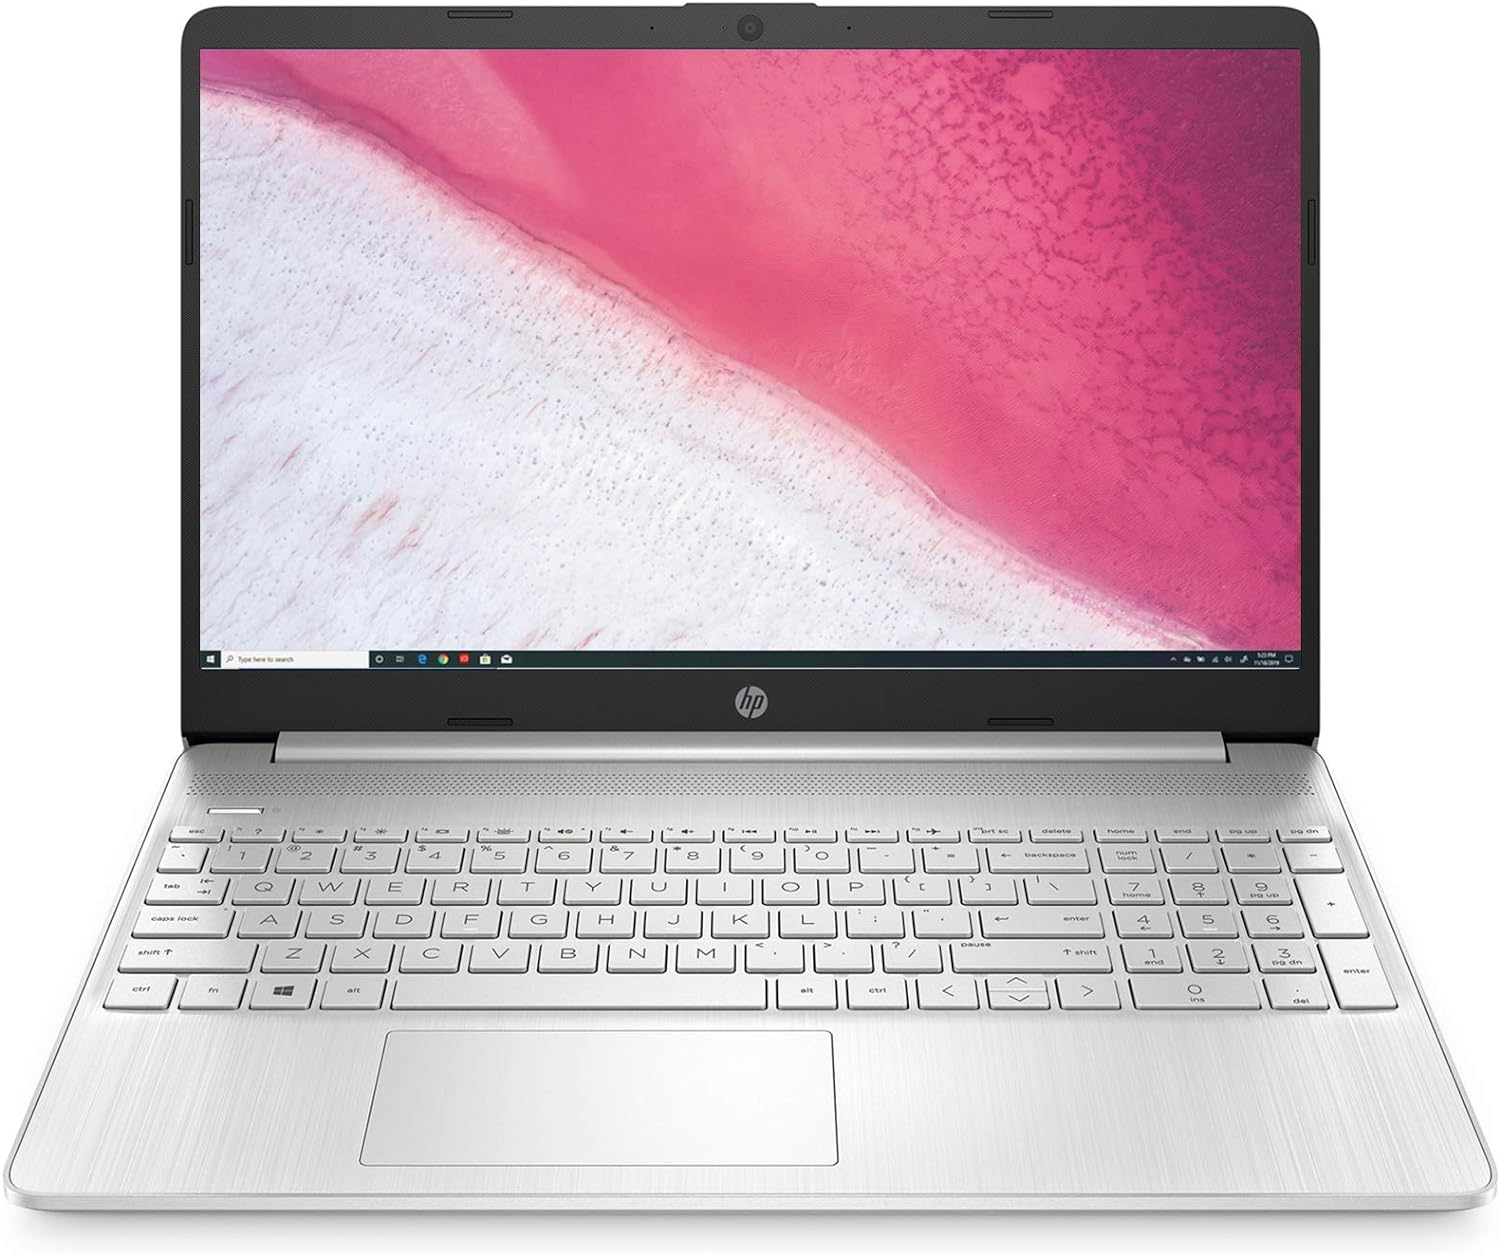 HP 15.6-inch HD Laptop with AMD Ryzen 3 3200U Processor